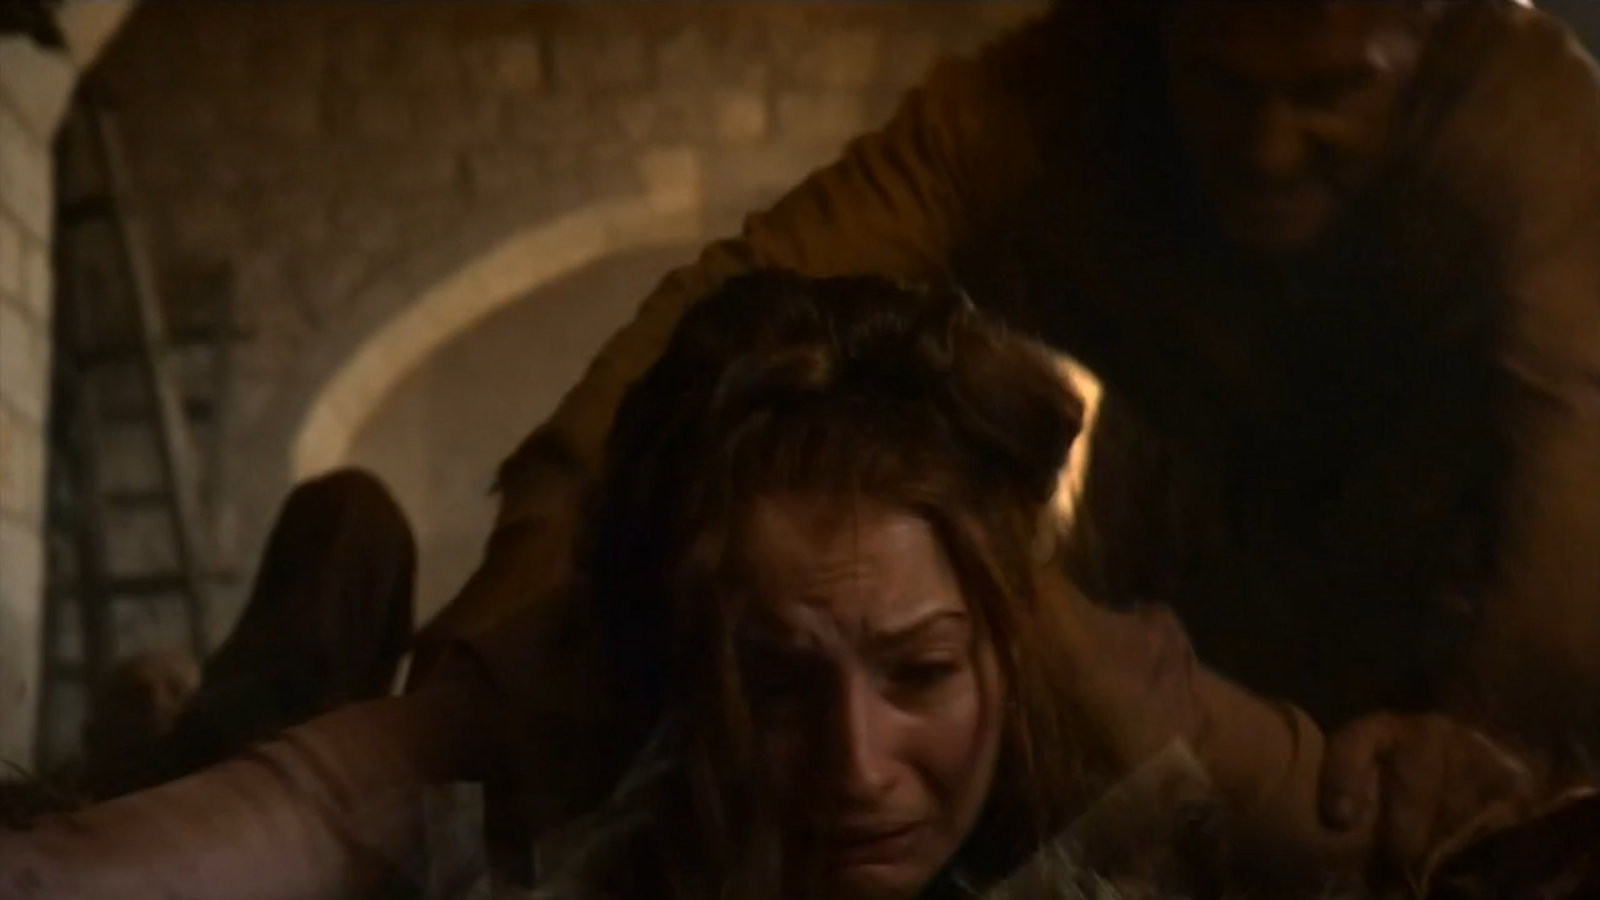 The most explicit sex scenes in the TV series Game of Thrones - Game of Thrones, Longpost, Daenerys Targaryen, Sansa Stark, Cersei Lannister, Missandei, Ygritte